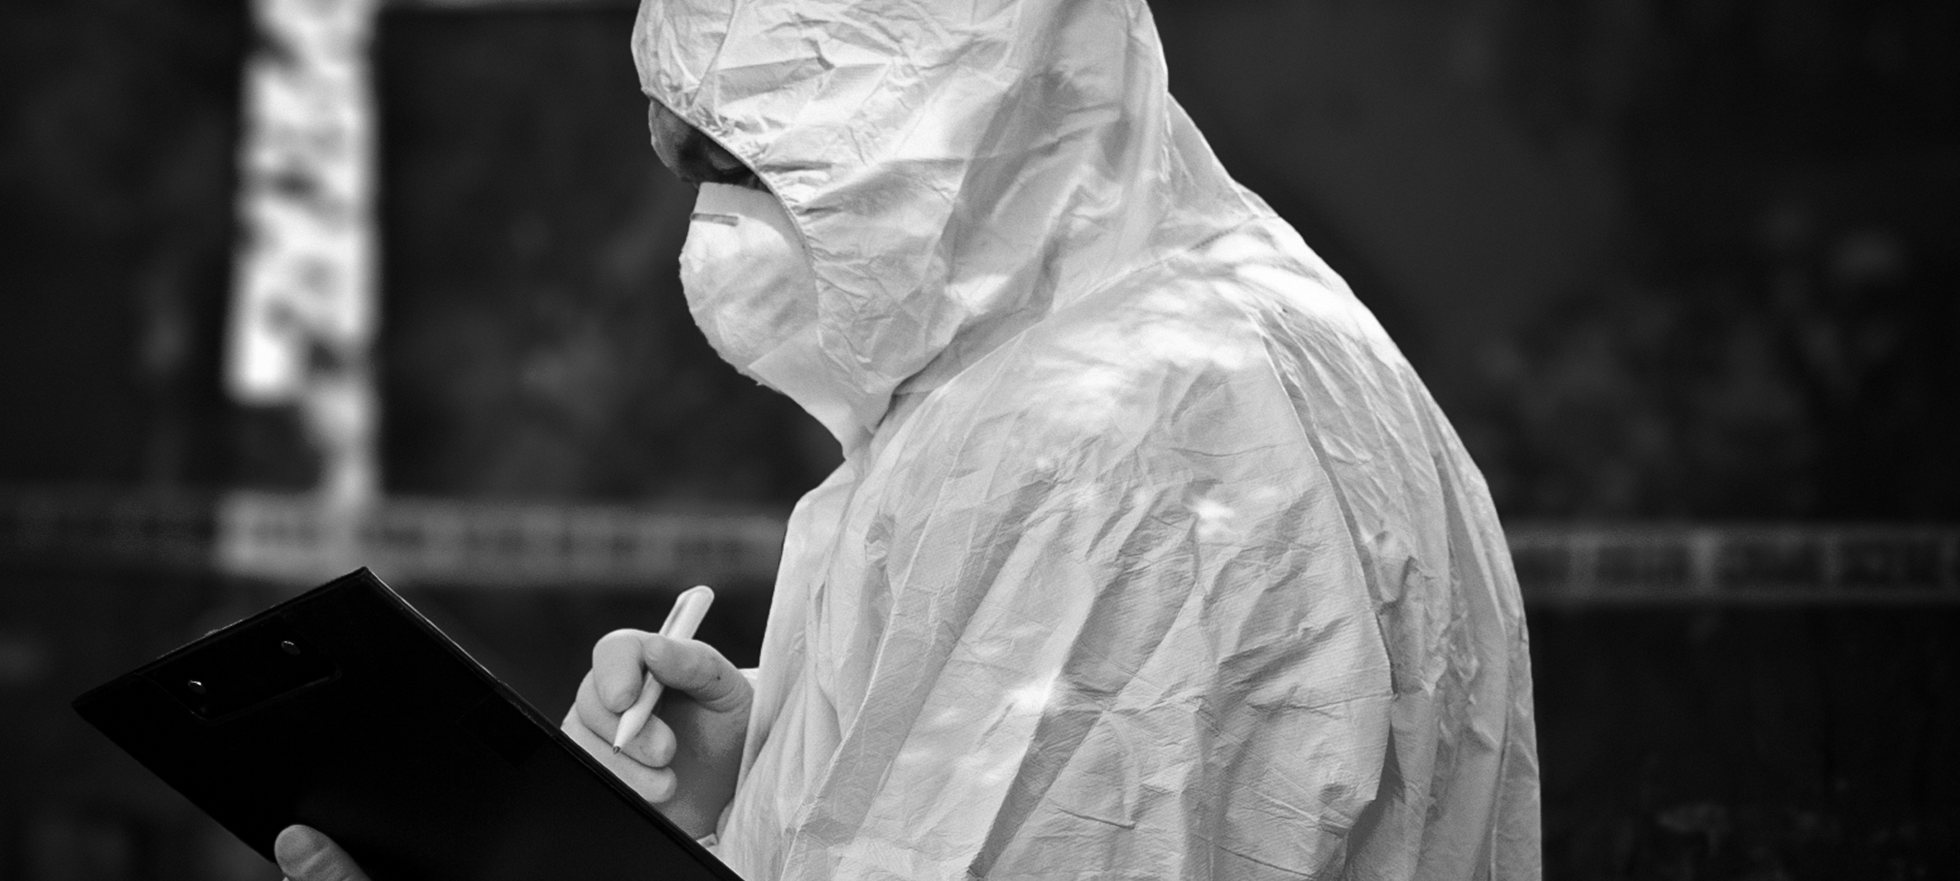 person in biohazard suit